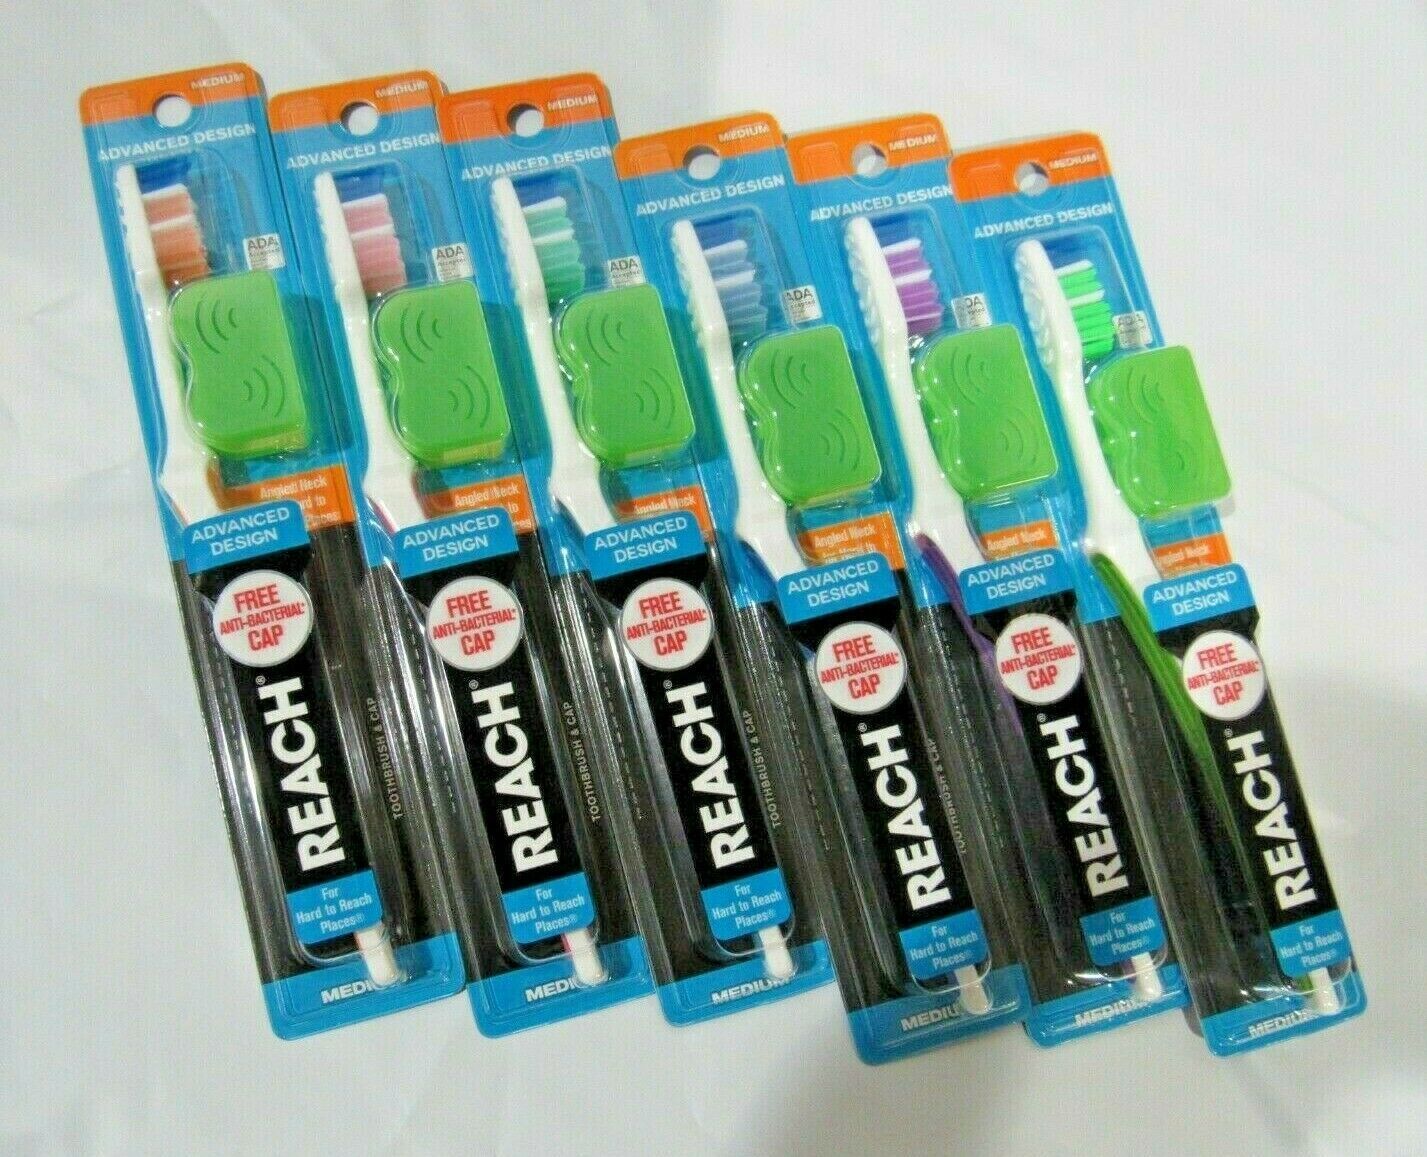 6 Reach Advanced Design Head Medium Toothbrush w/Toothbrush Cover Random Color - $47.99